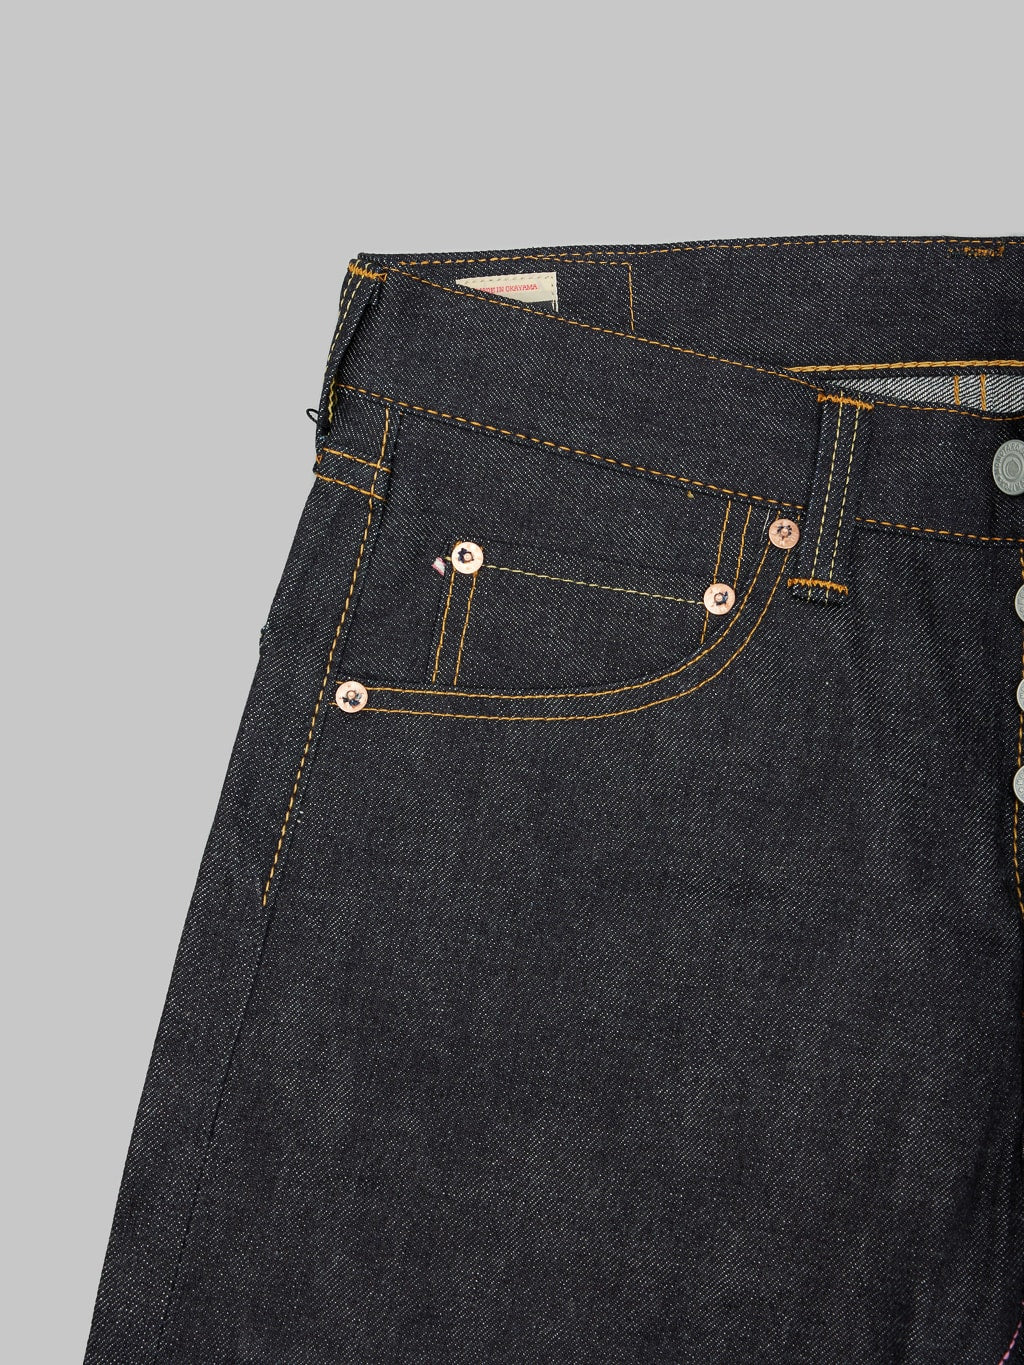 momotaro jeans 0306 12 12oz selvedge denim tight tapered coin pocket